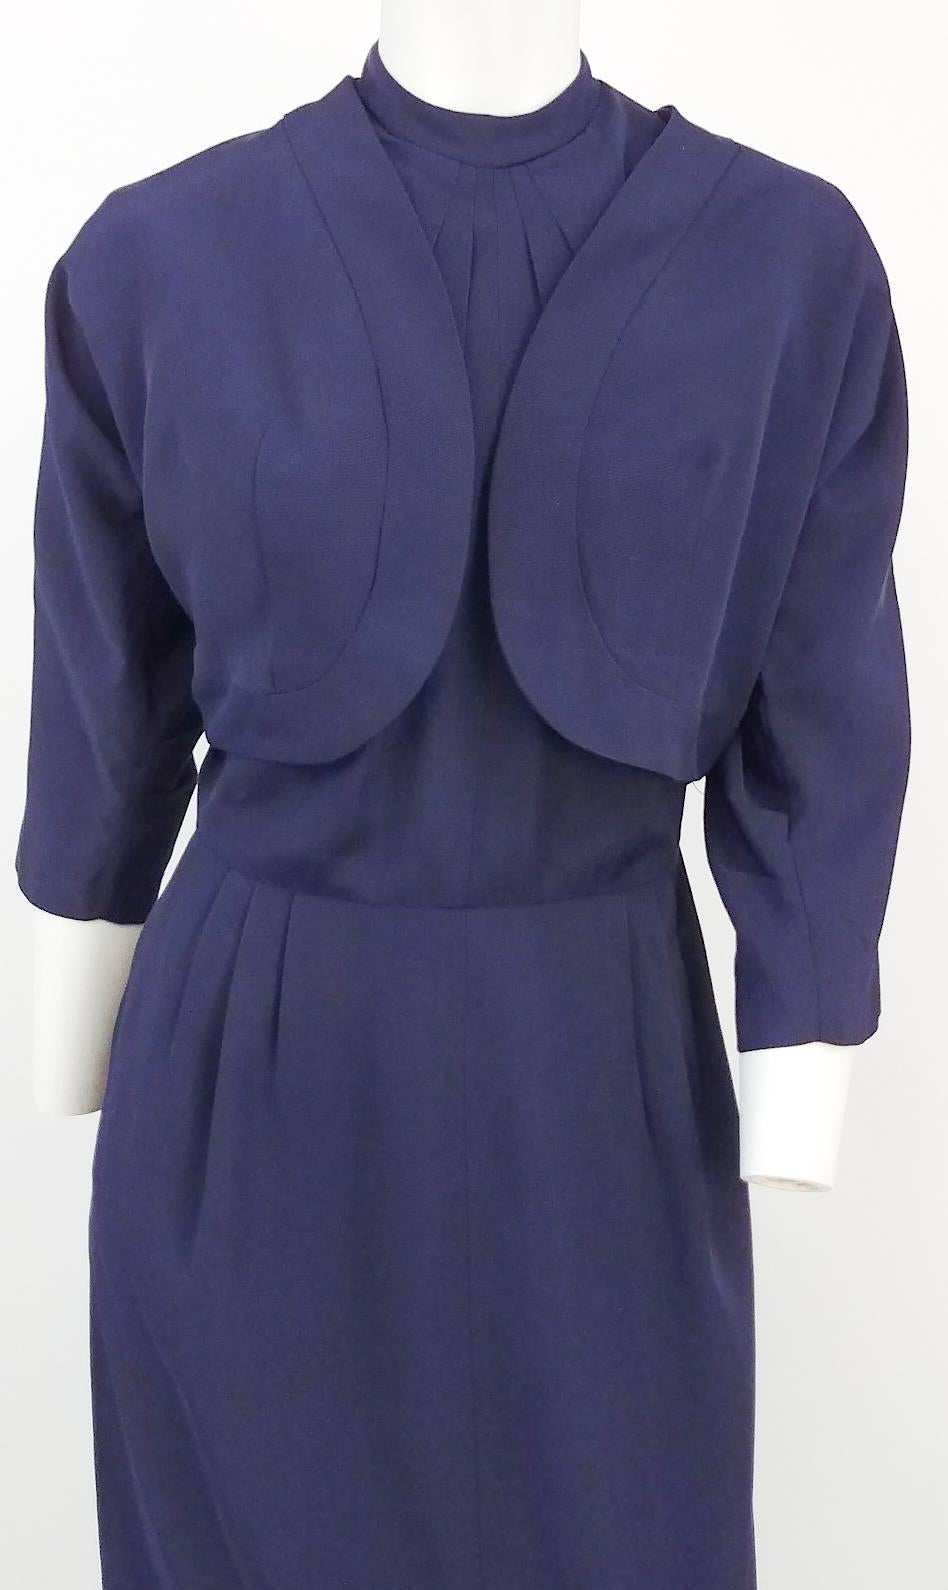 60s Navy Blue Dress & Bolero Set. Pintuck collar detail. Short dolman sleeves. Zips up back. Unlined. 